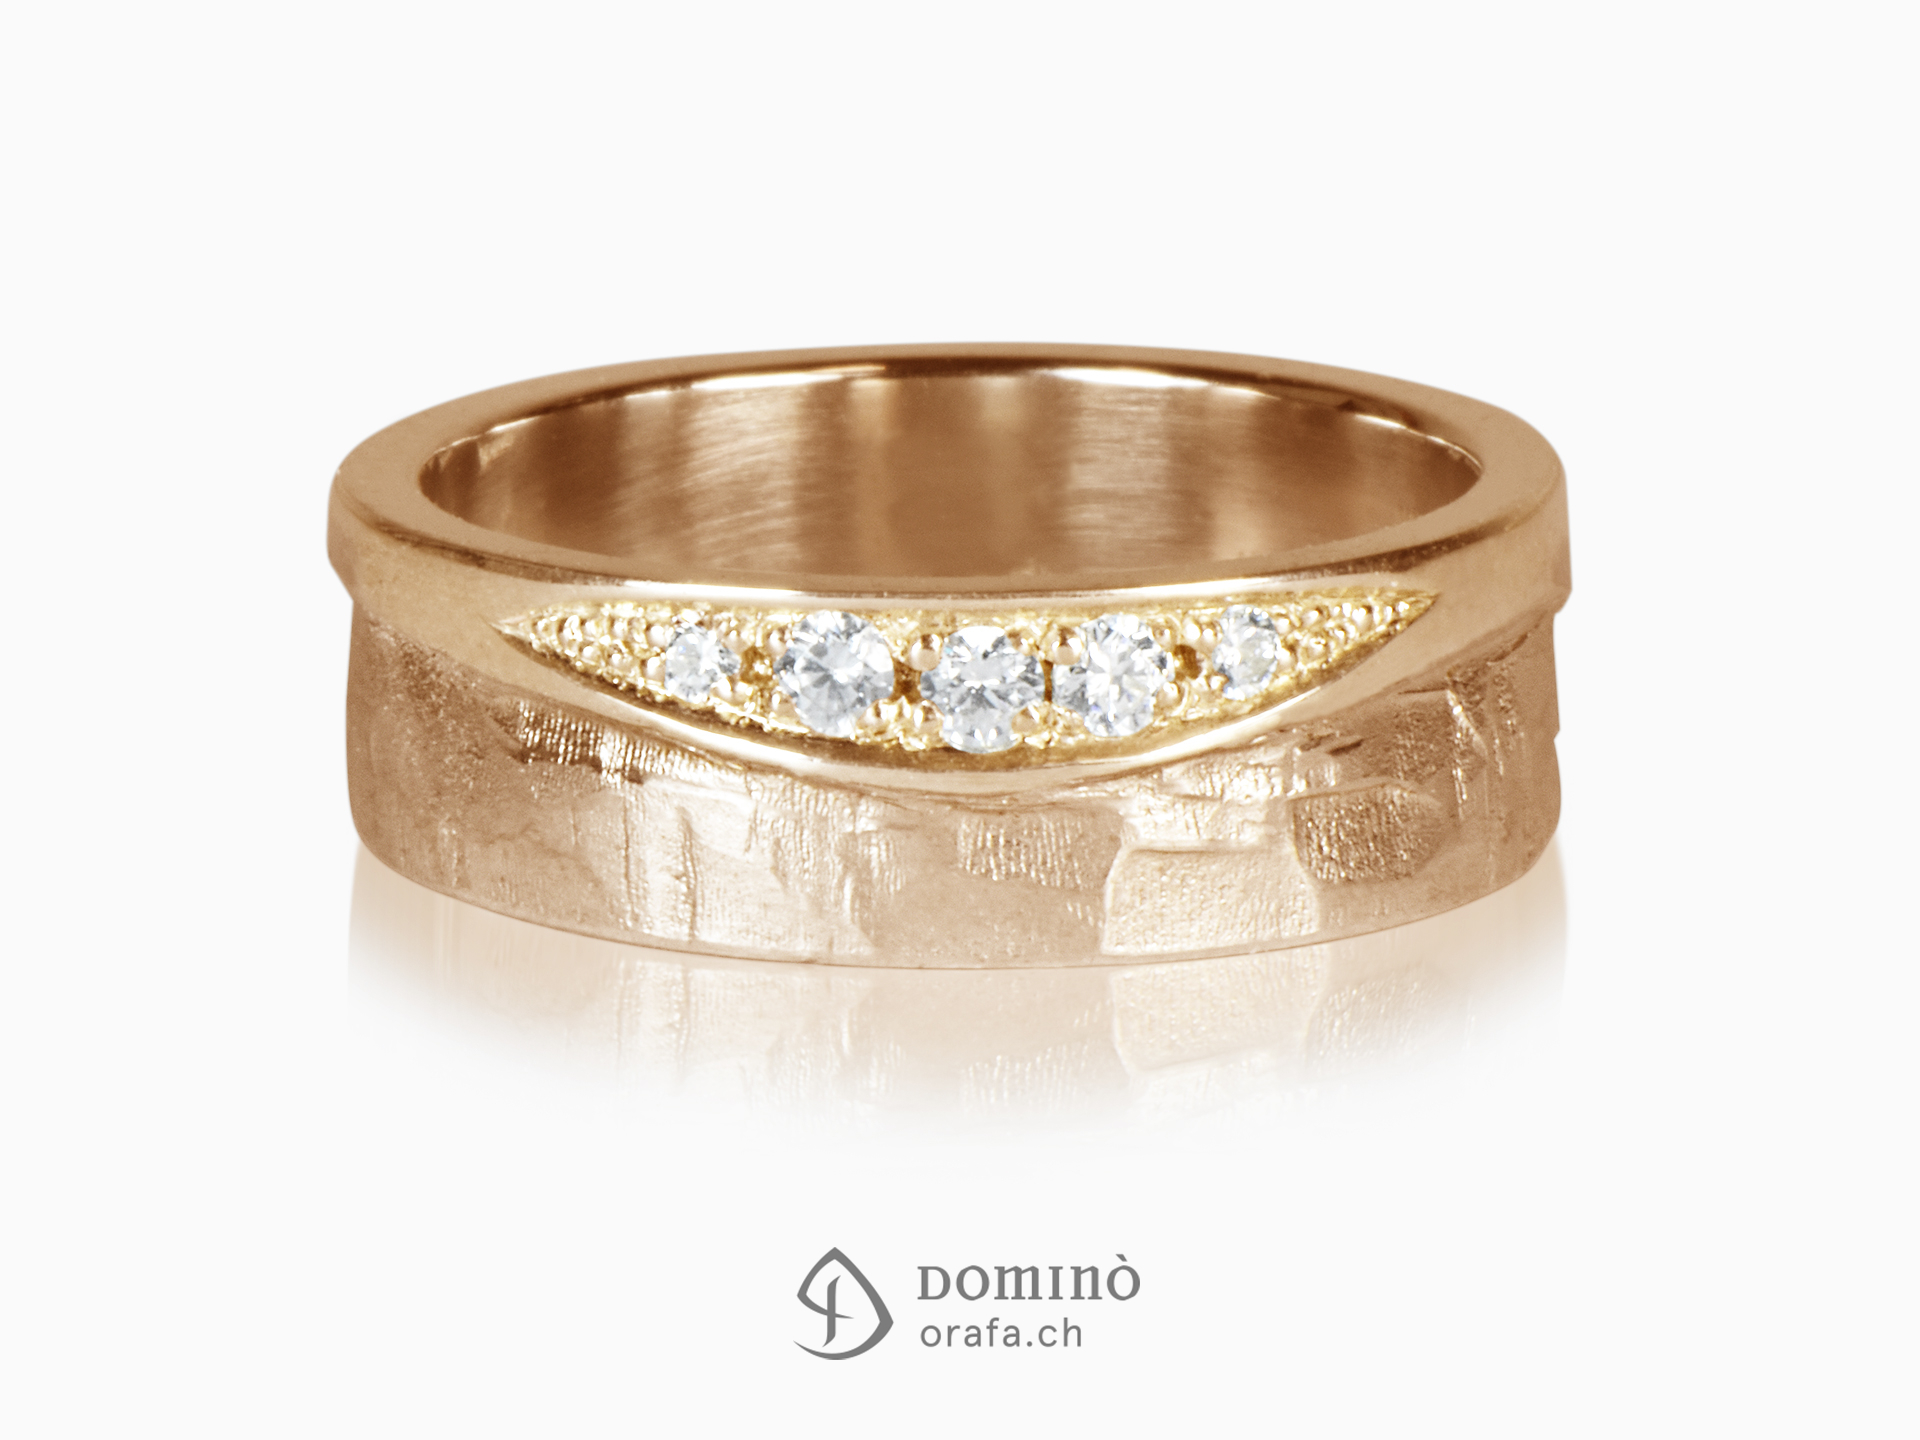 Sentiero/ polished ring with diamonds